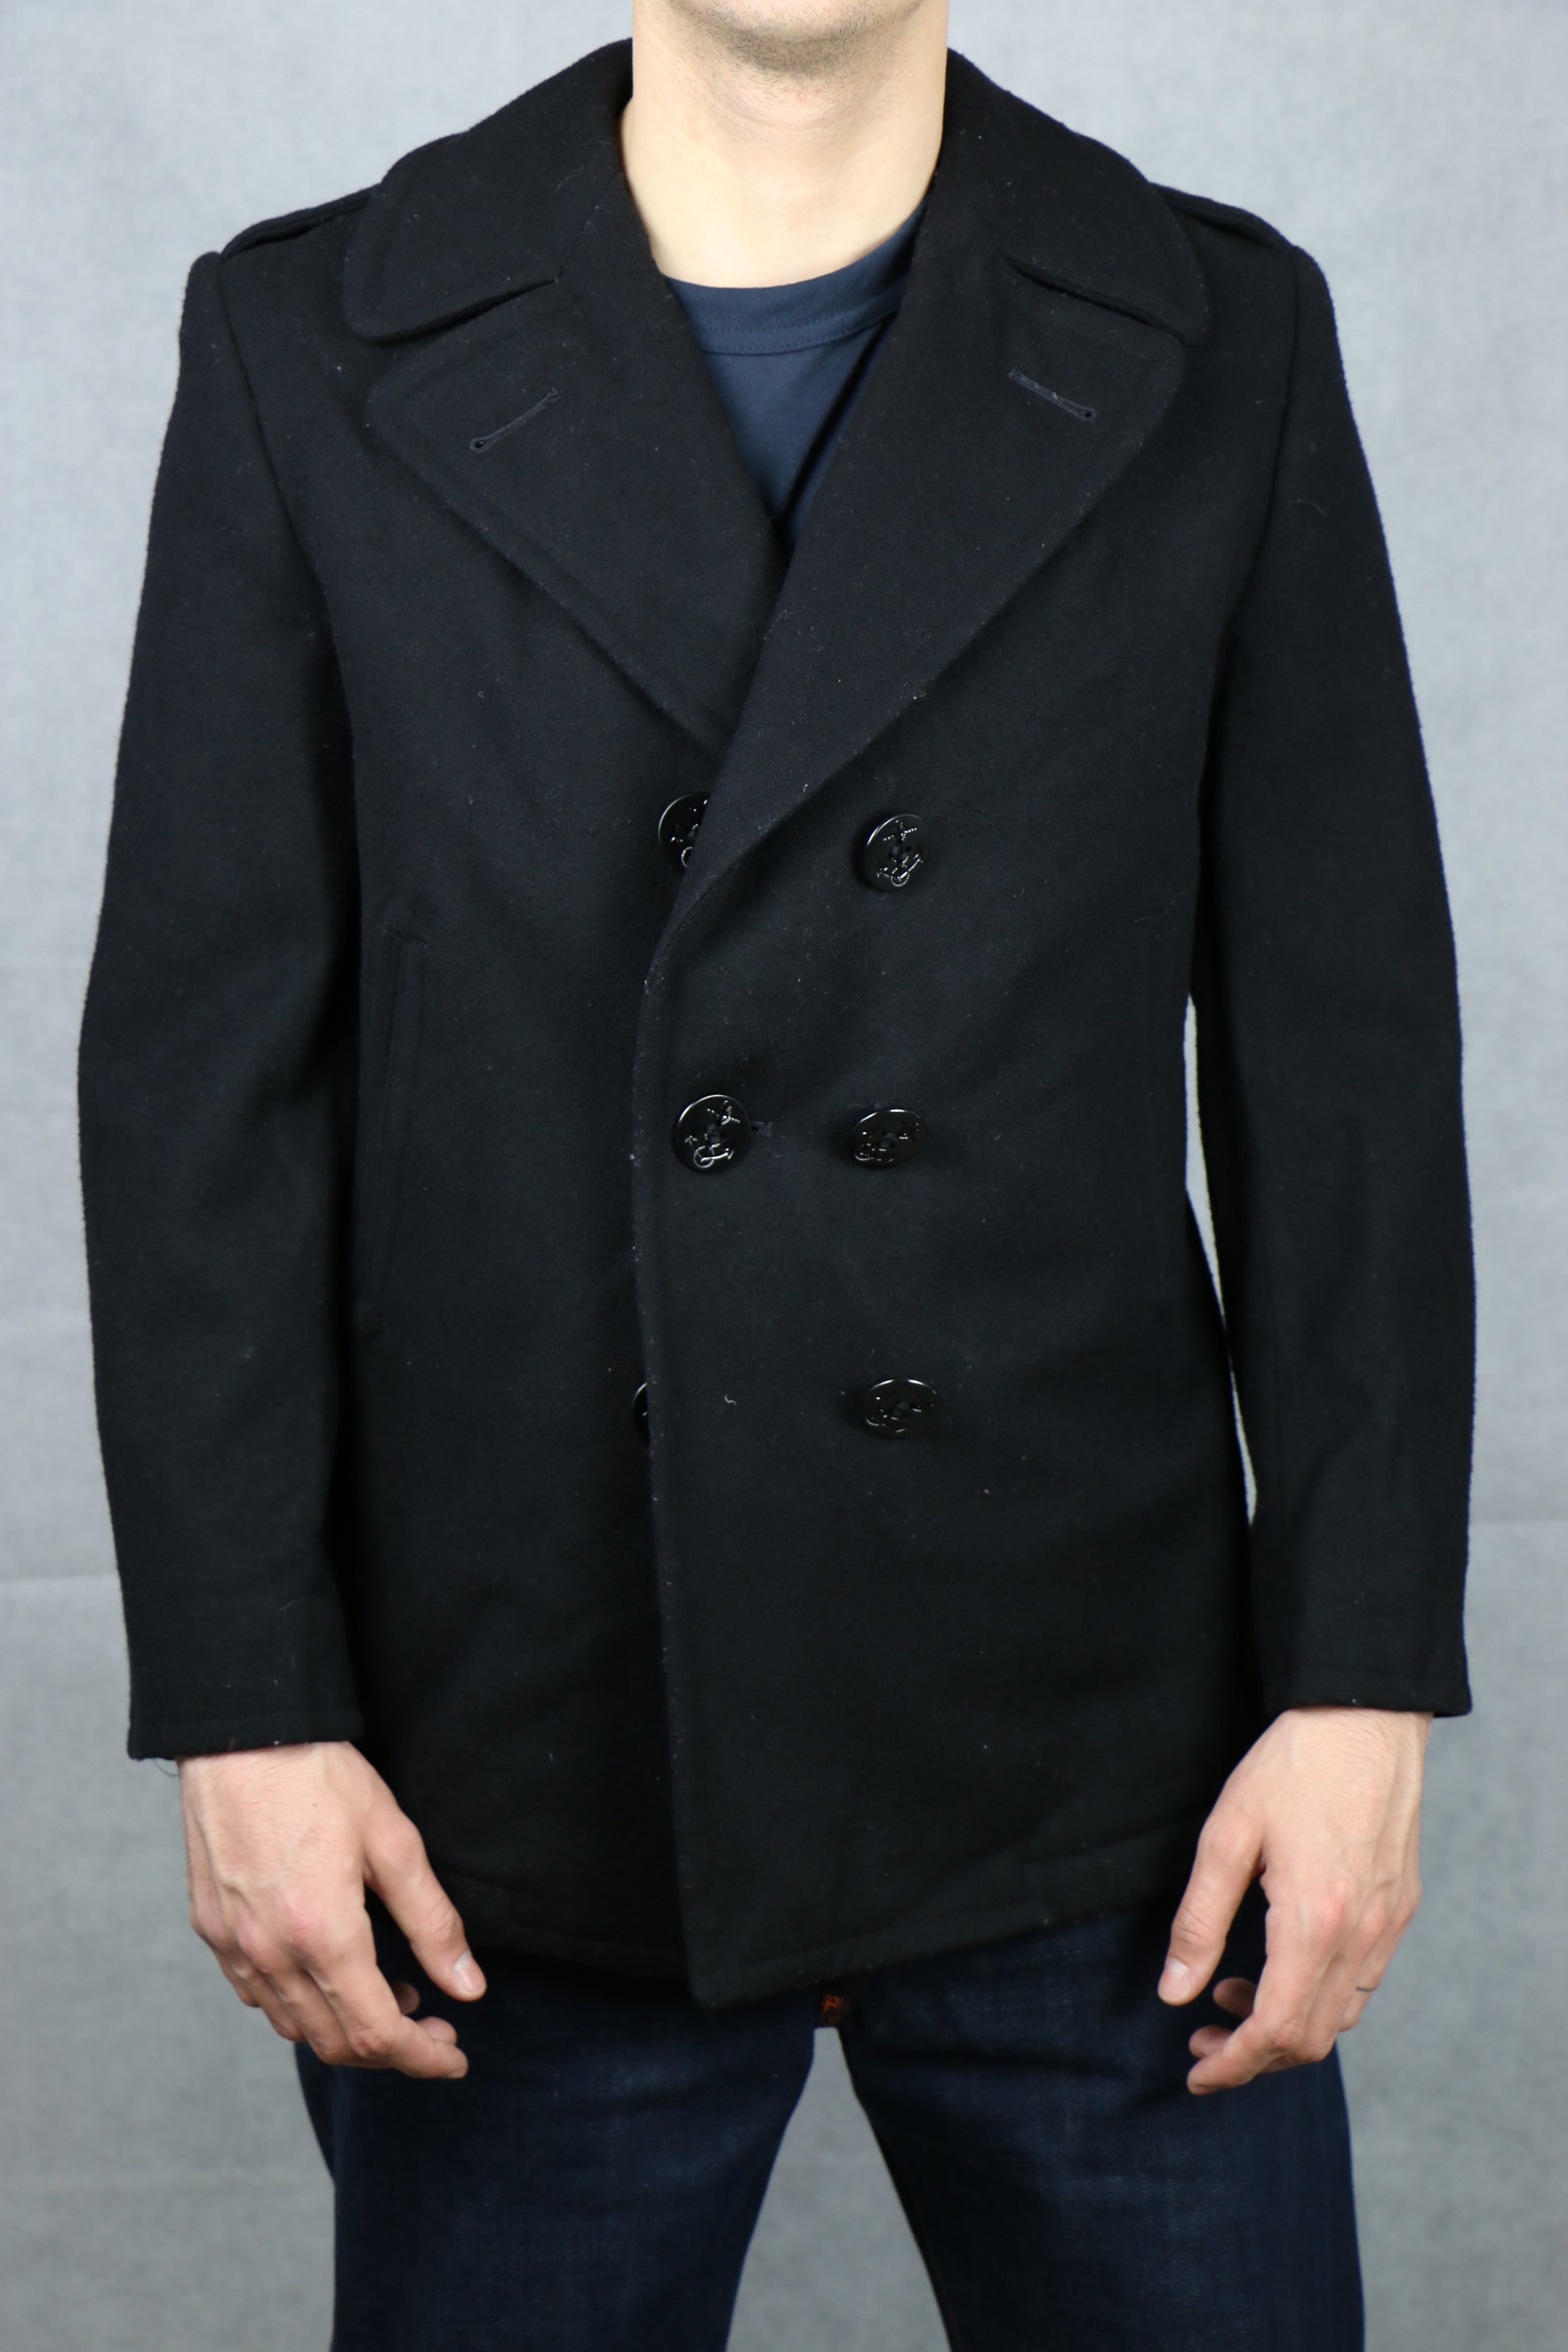 Pea Coat 2001 - vintage clothing clochard92.com